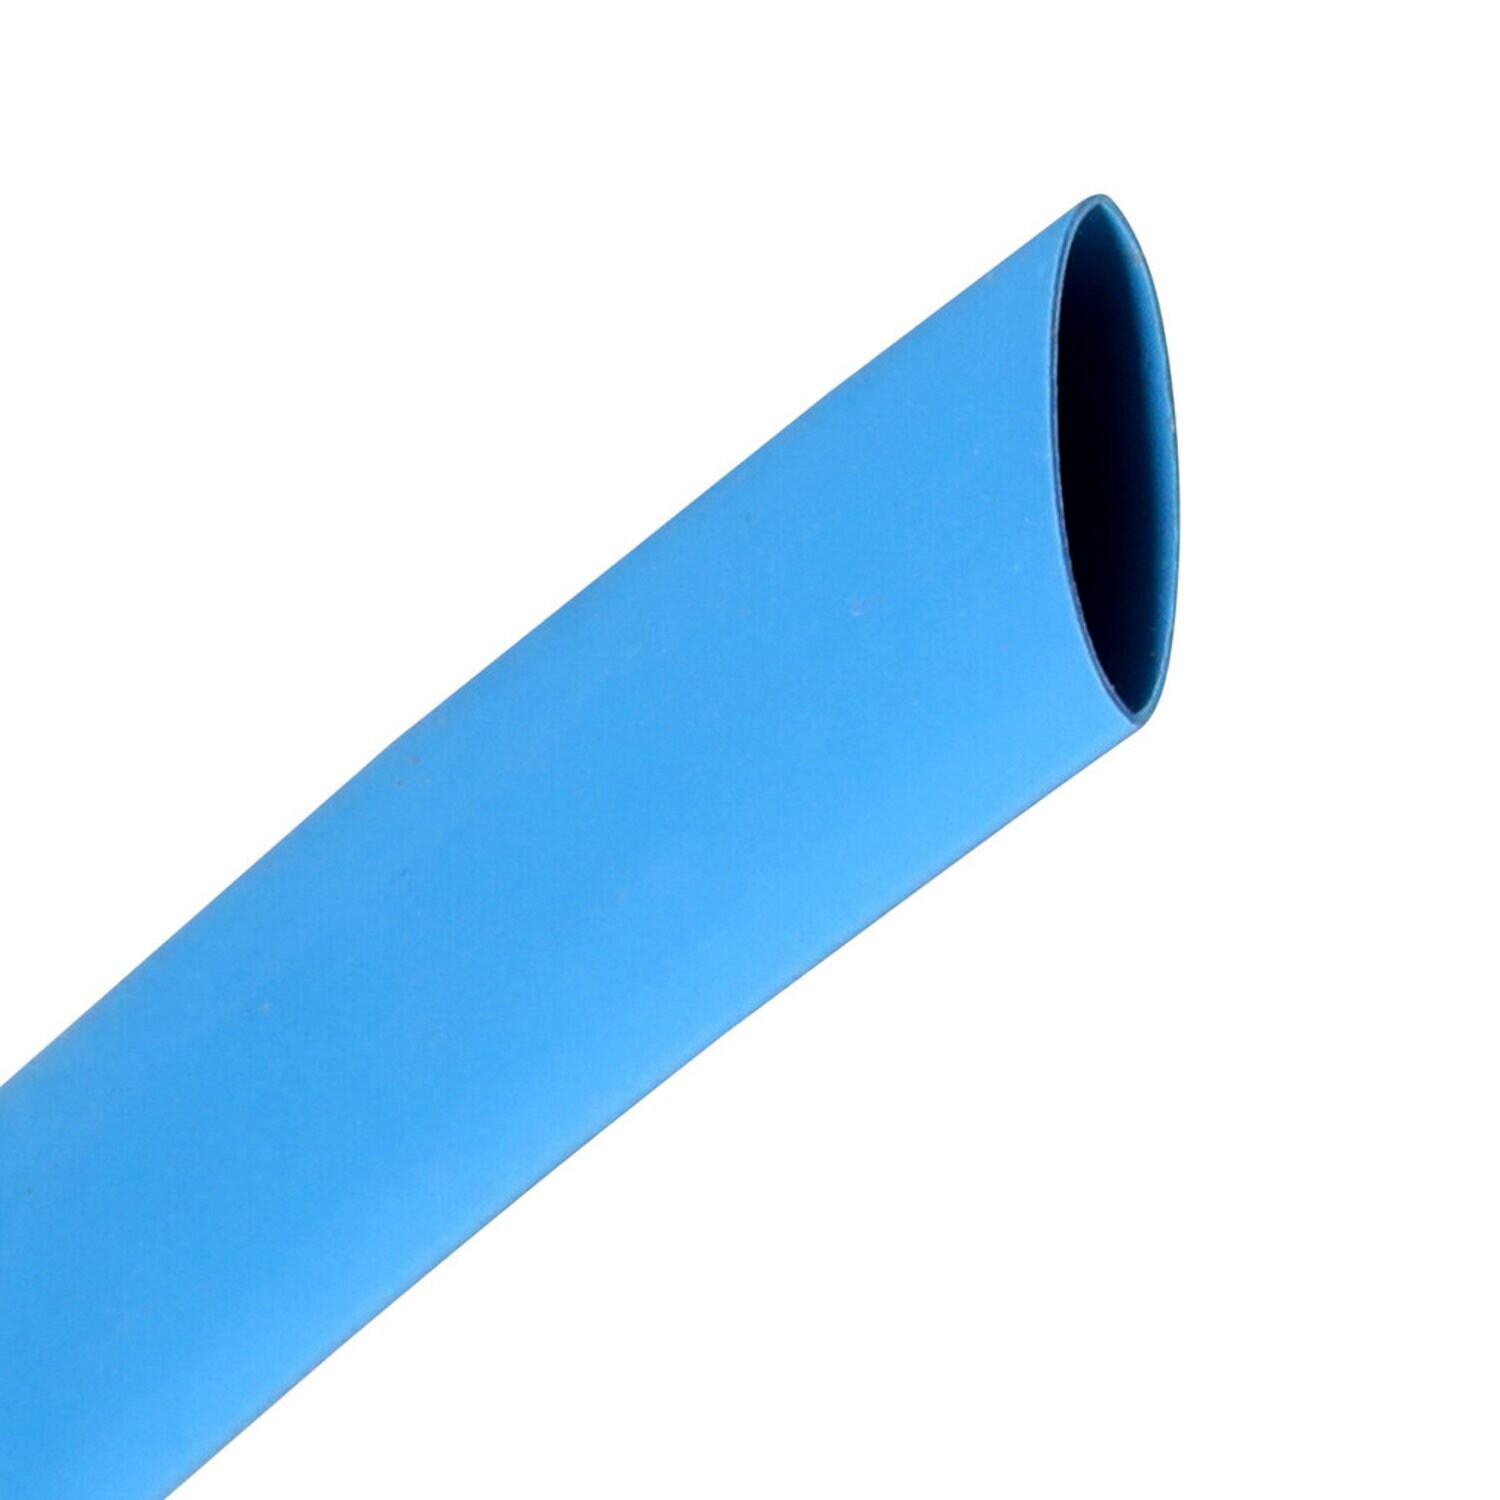 7100100415 - 3M Heat Shrink Thin-Wall Tubing FP-301-3/8-Blue-200`: 200 ft spool
length, 600 linear ft/box, 3 Rolls/Case